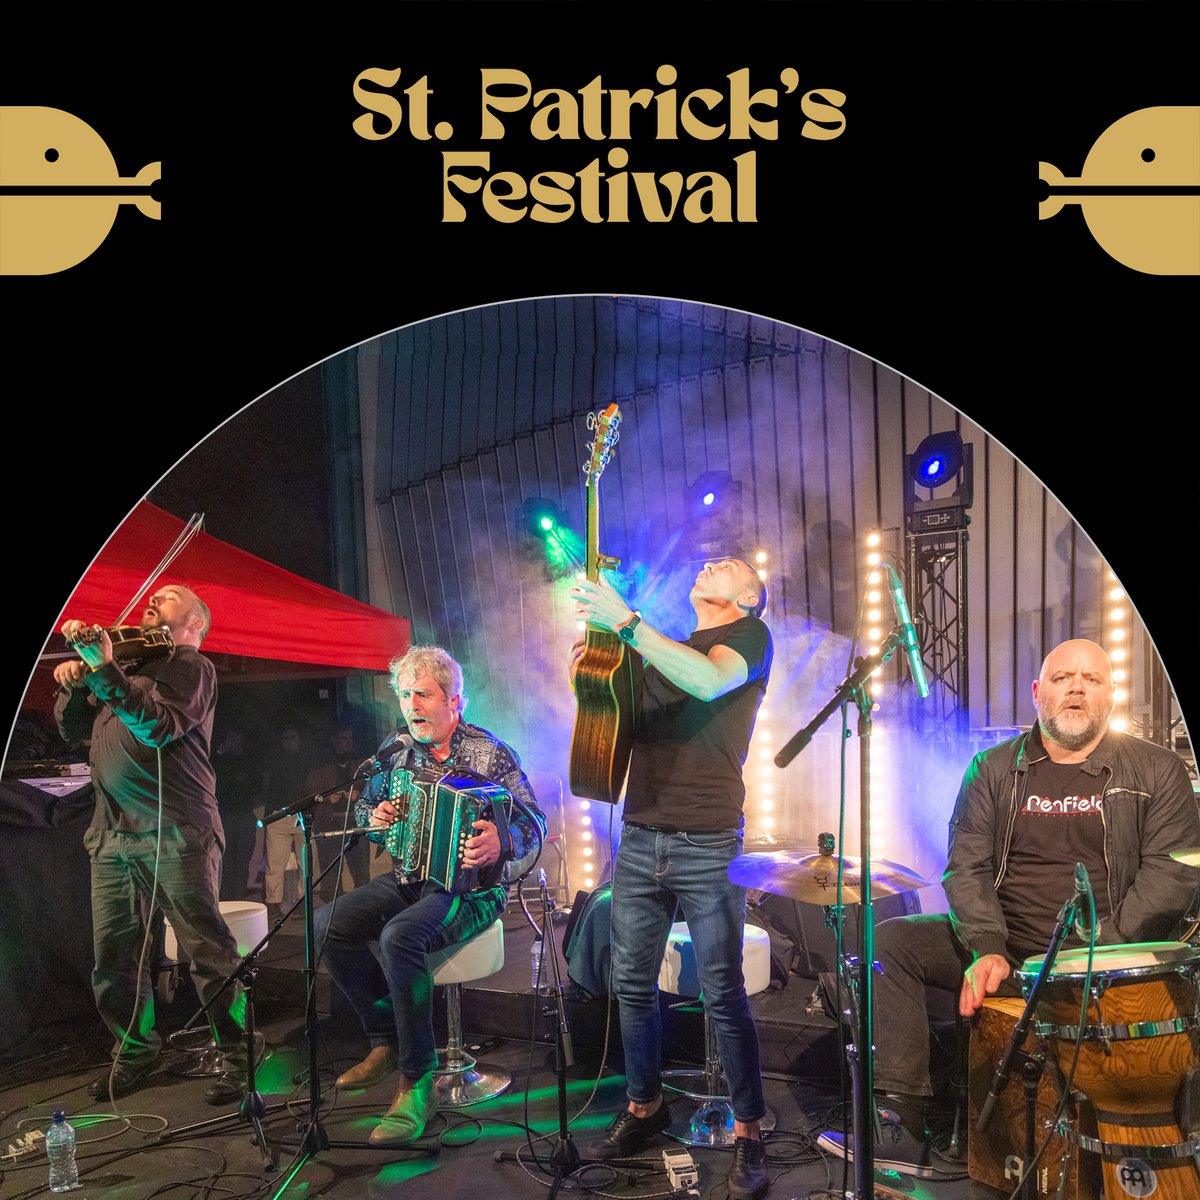 We will be playing on the Mainstage @ Festival Quarter
@stpatricksfest ☘️ 

📍 National Museum of Ireland, Collins Barracks
📅 Friday March 17th, 6pm

#SPF23 #StPatricksFestival @NMIreland #LáFhéilePádraig